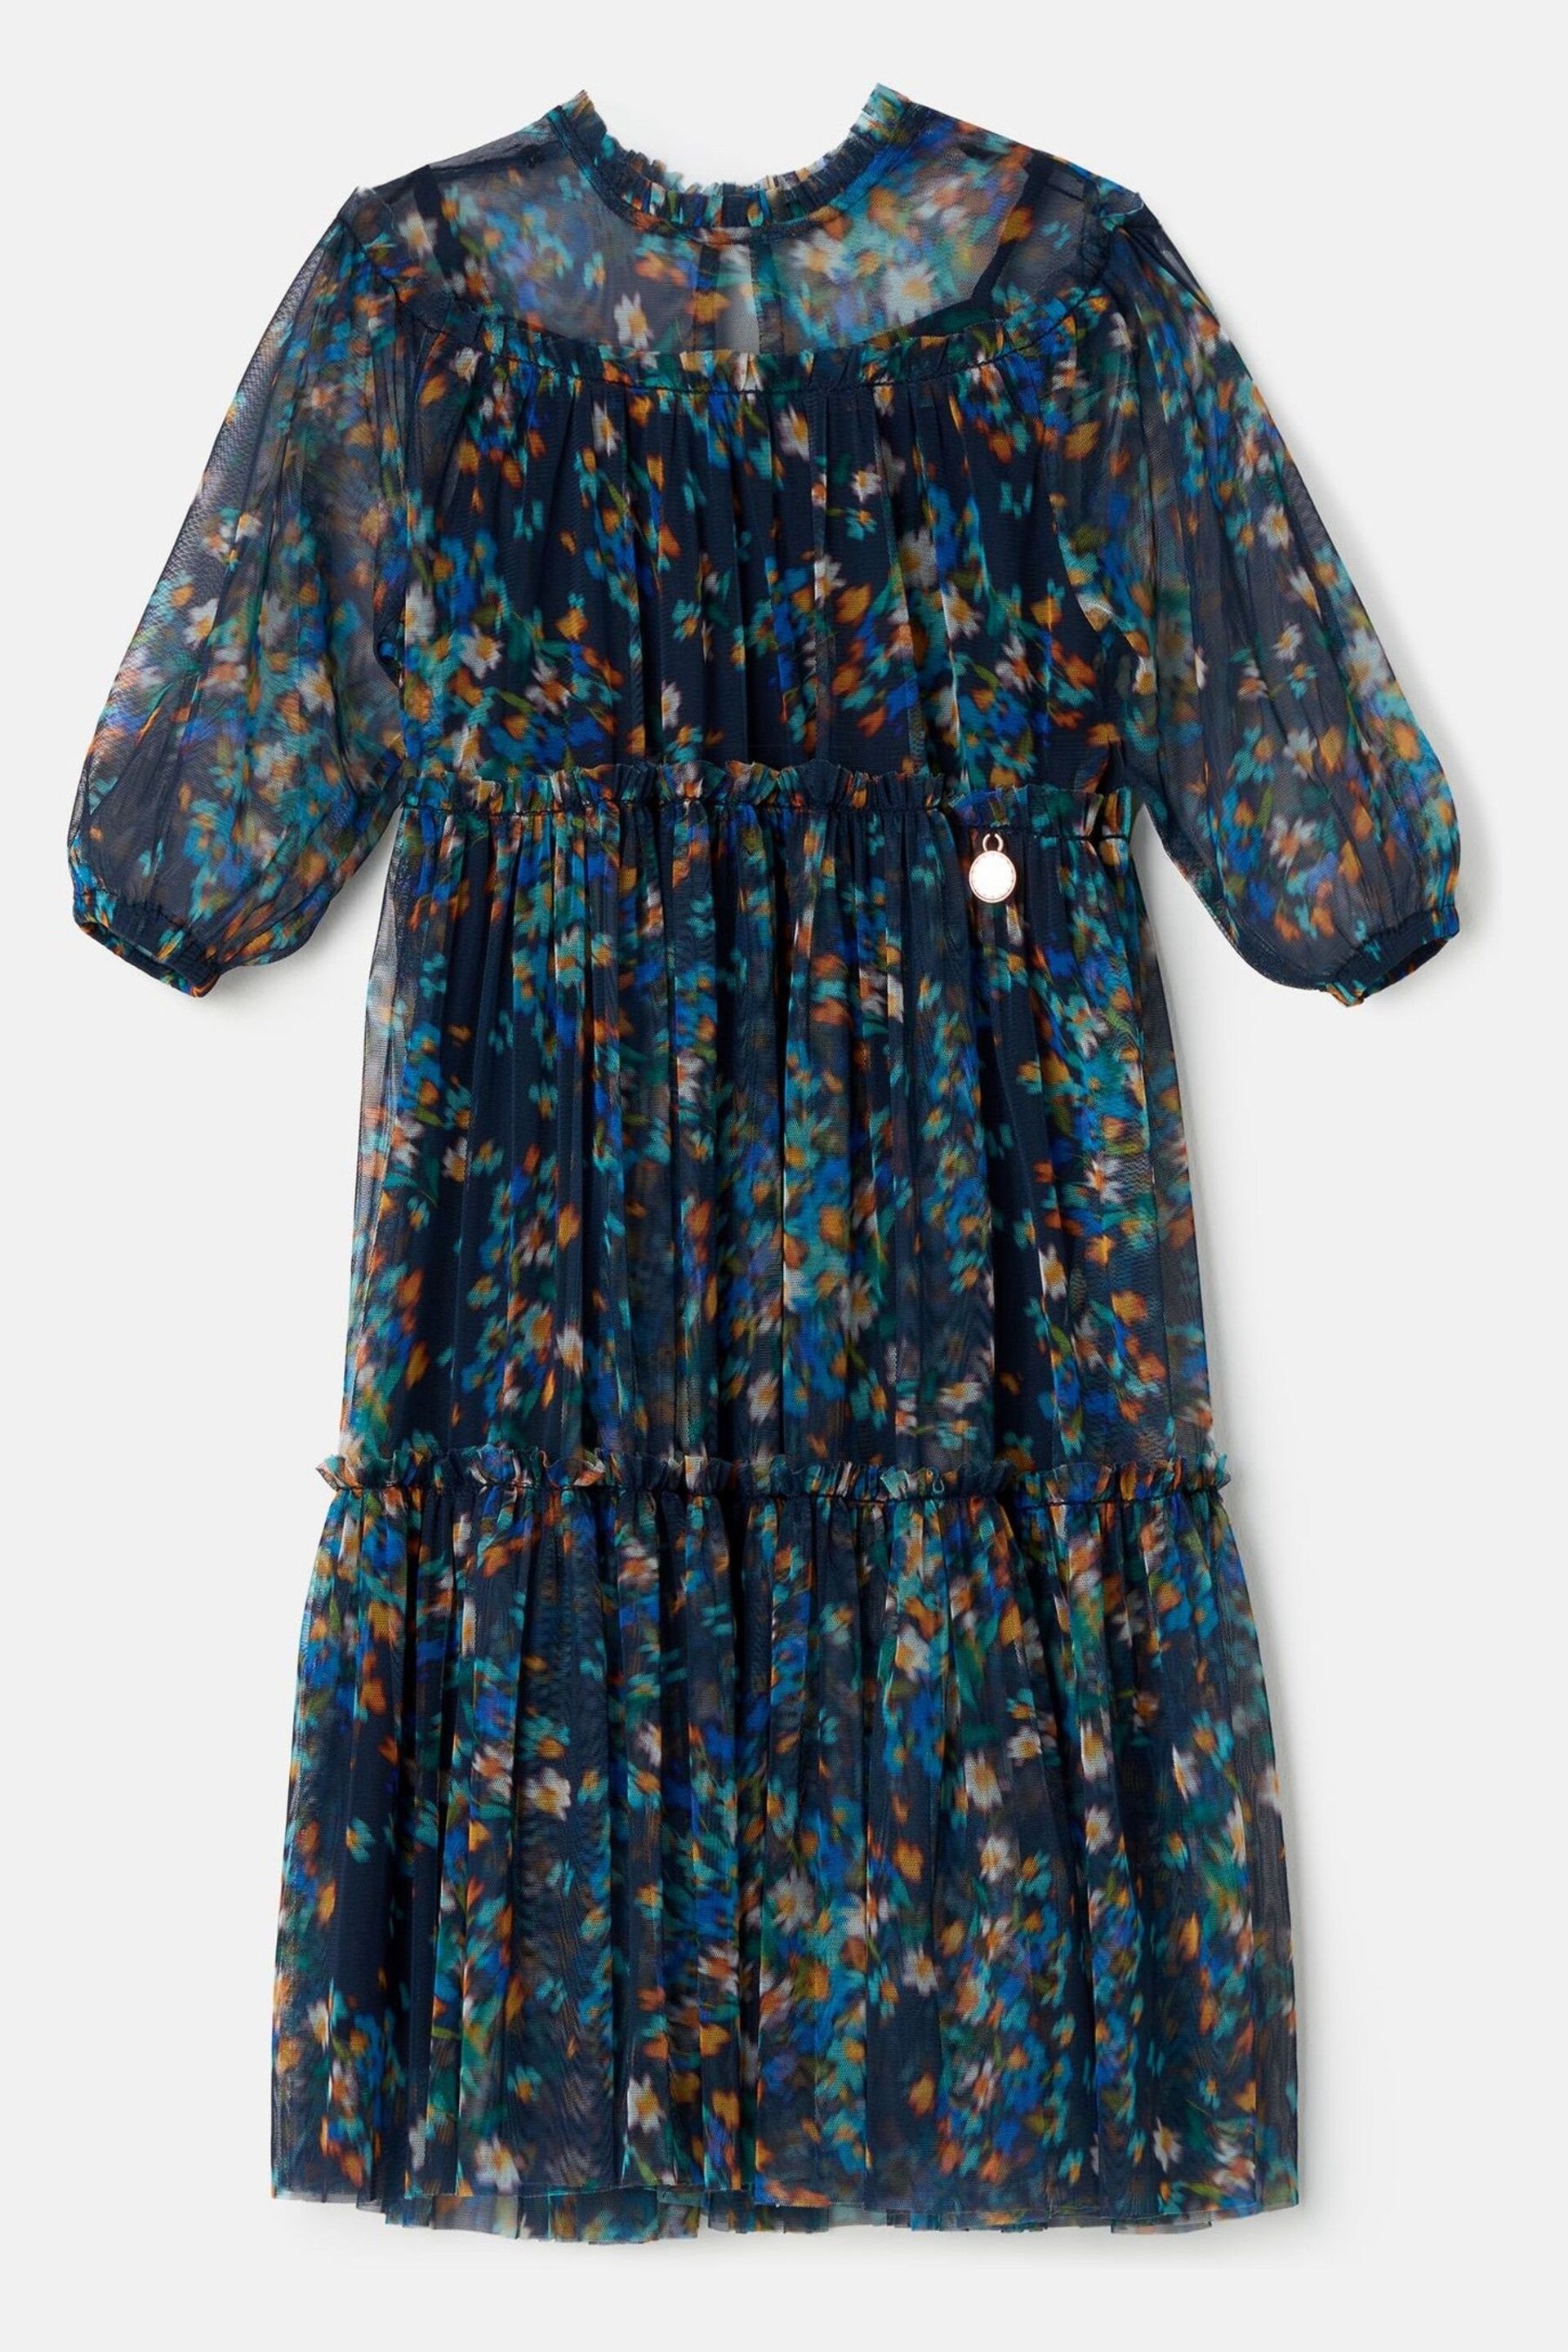 Angel & Rocket Navy Blue Floral Eleanor Print Mesh Dress - Image 5 of 7